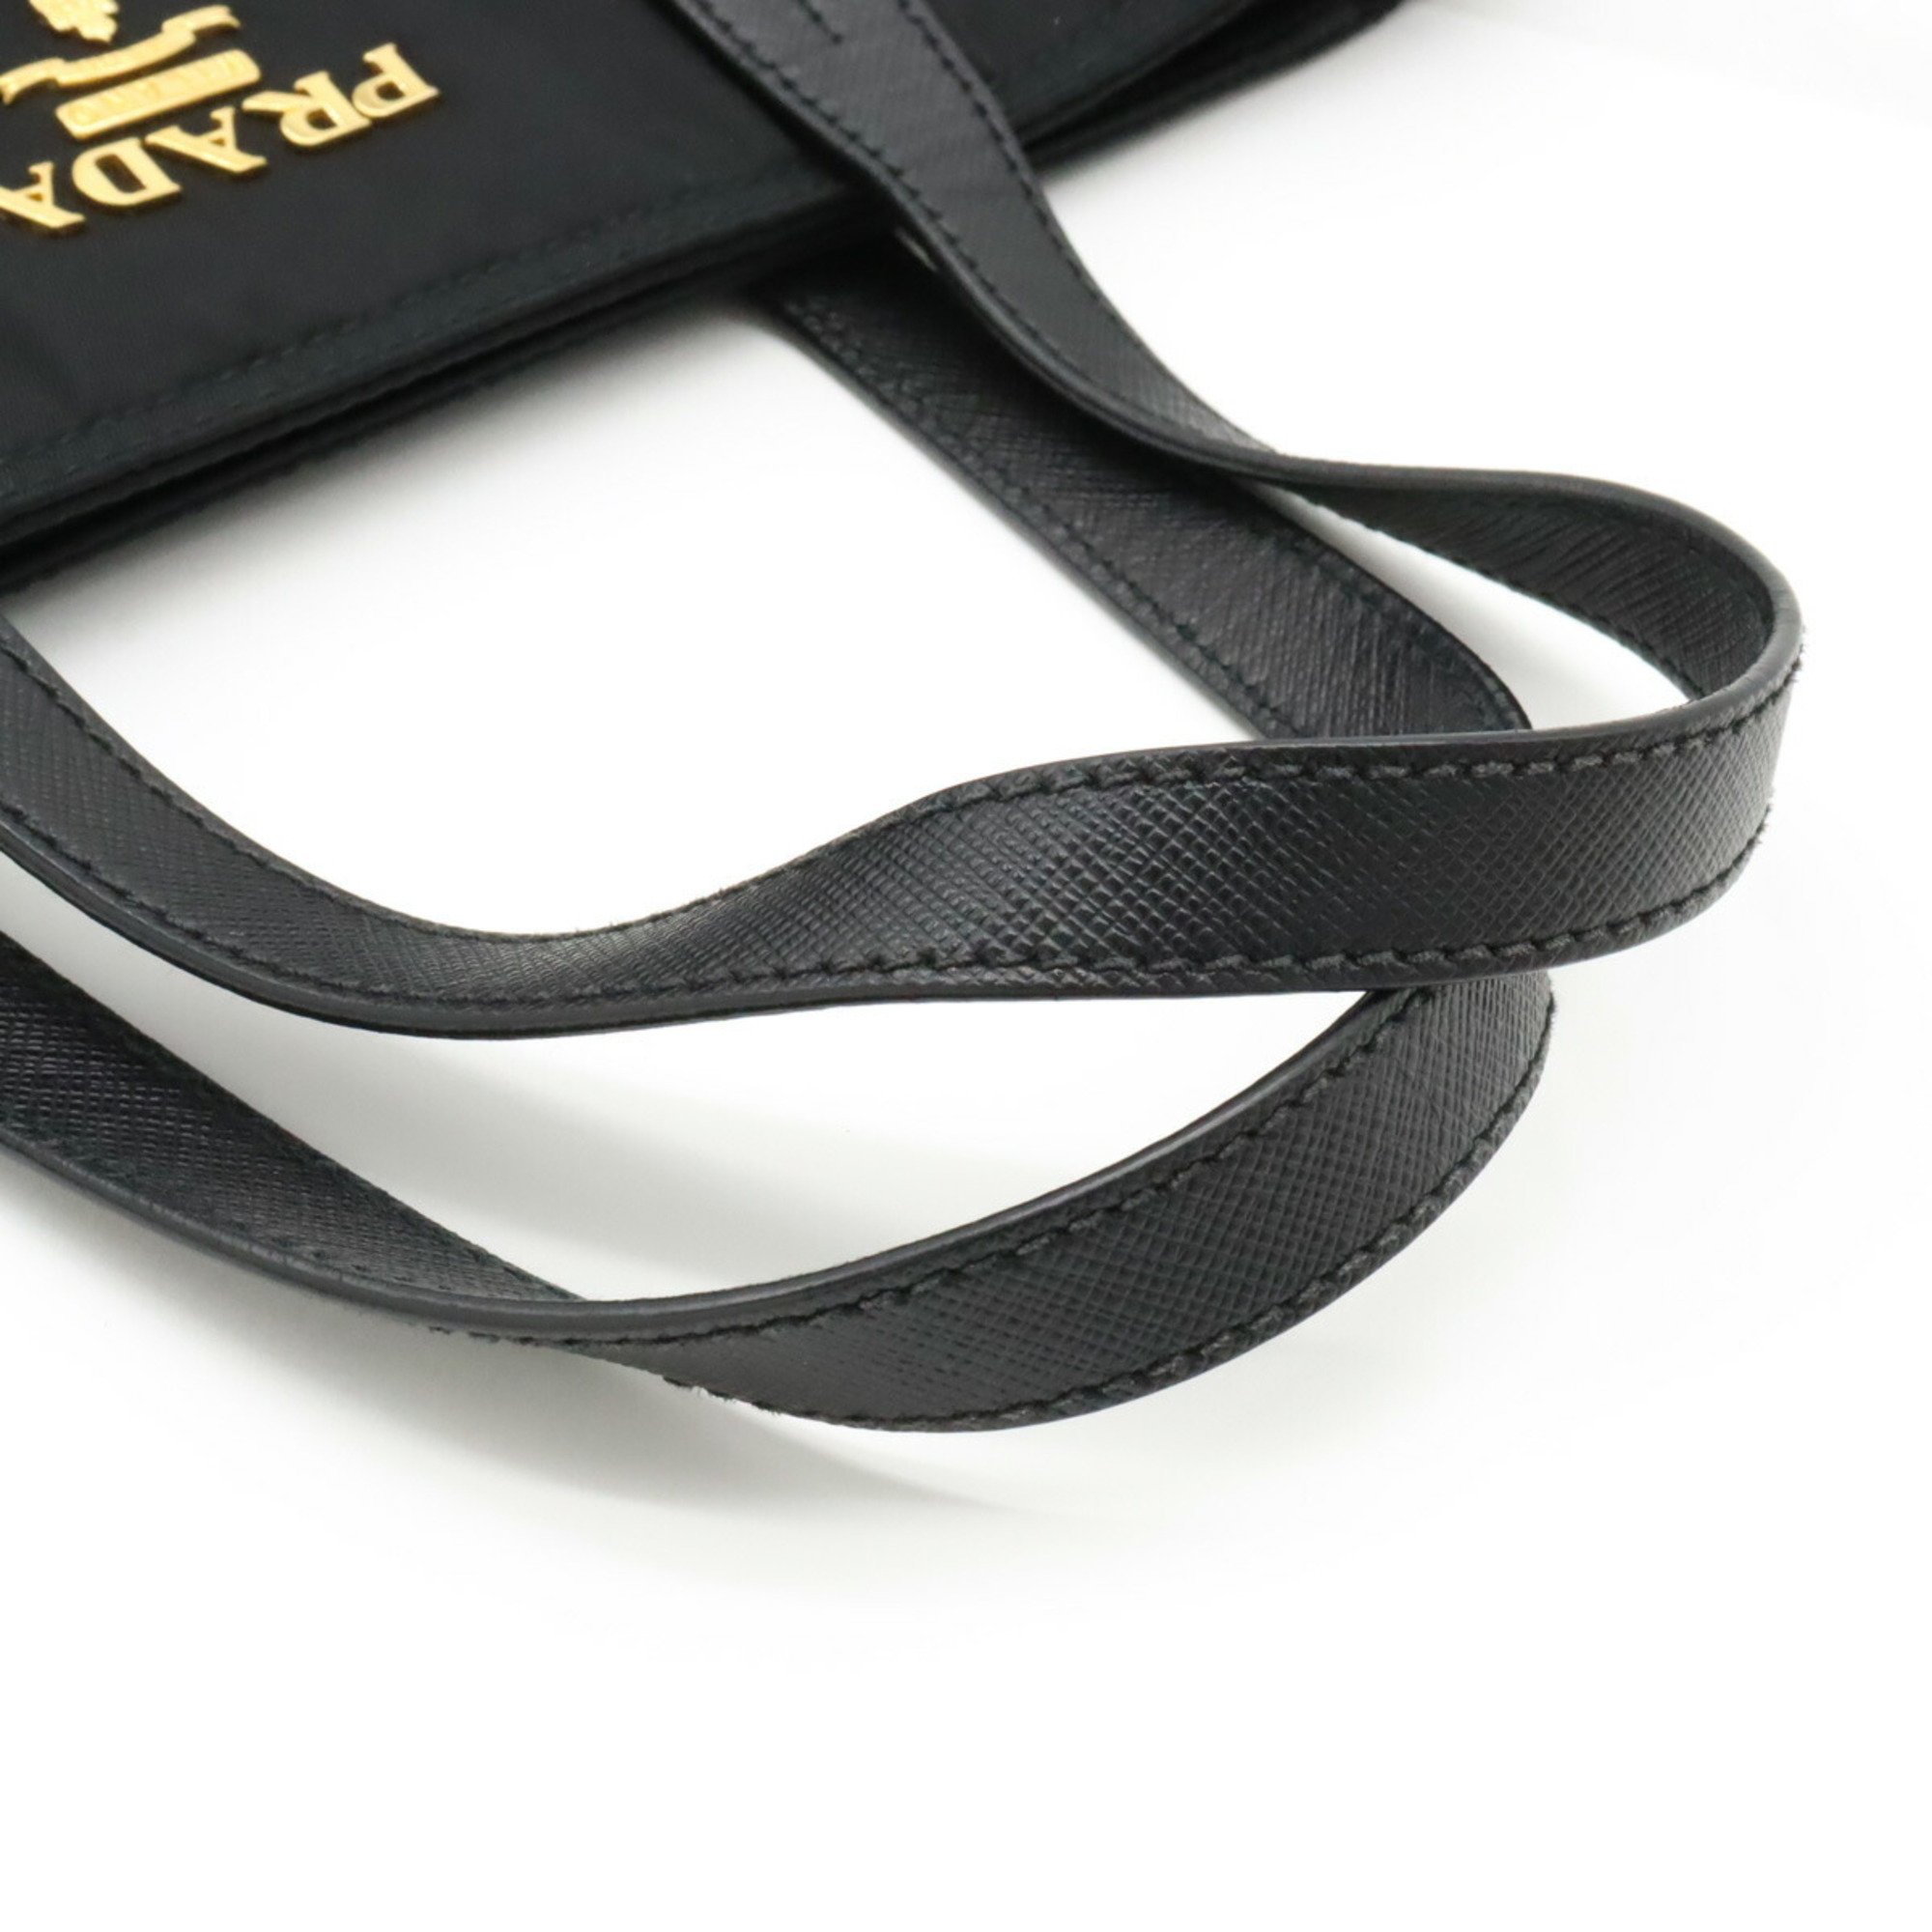 PRADA Prada Tote Bag Handbag Shoulder Flower Motif Nylon Leather NERO Black Purchased at a Japanese Boutique 1BA084